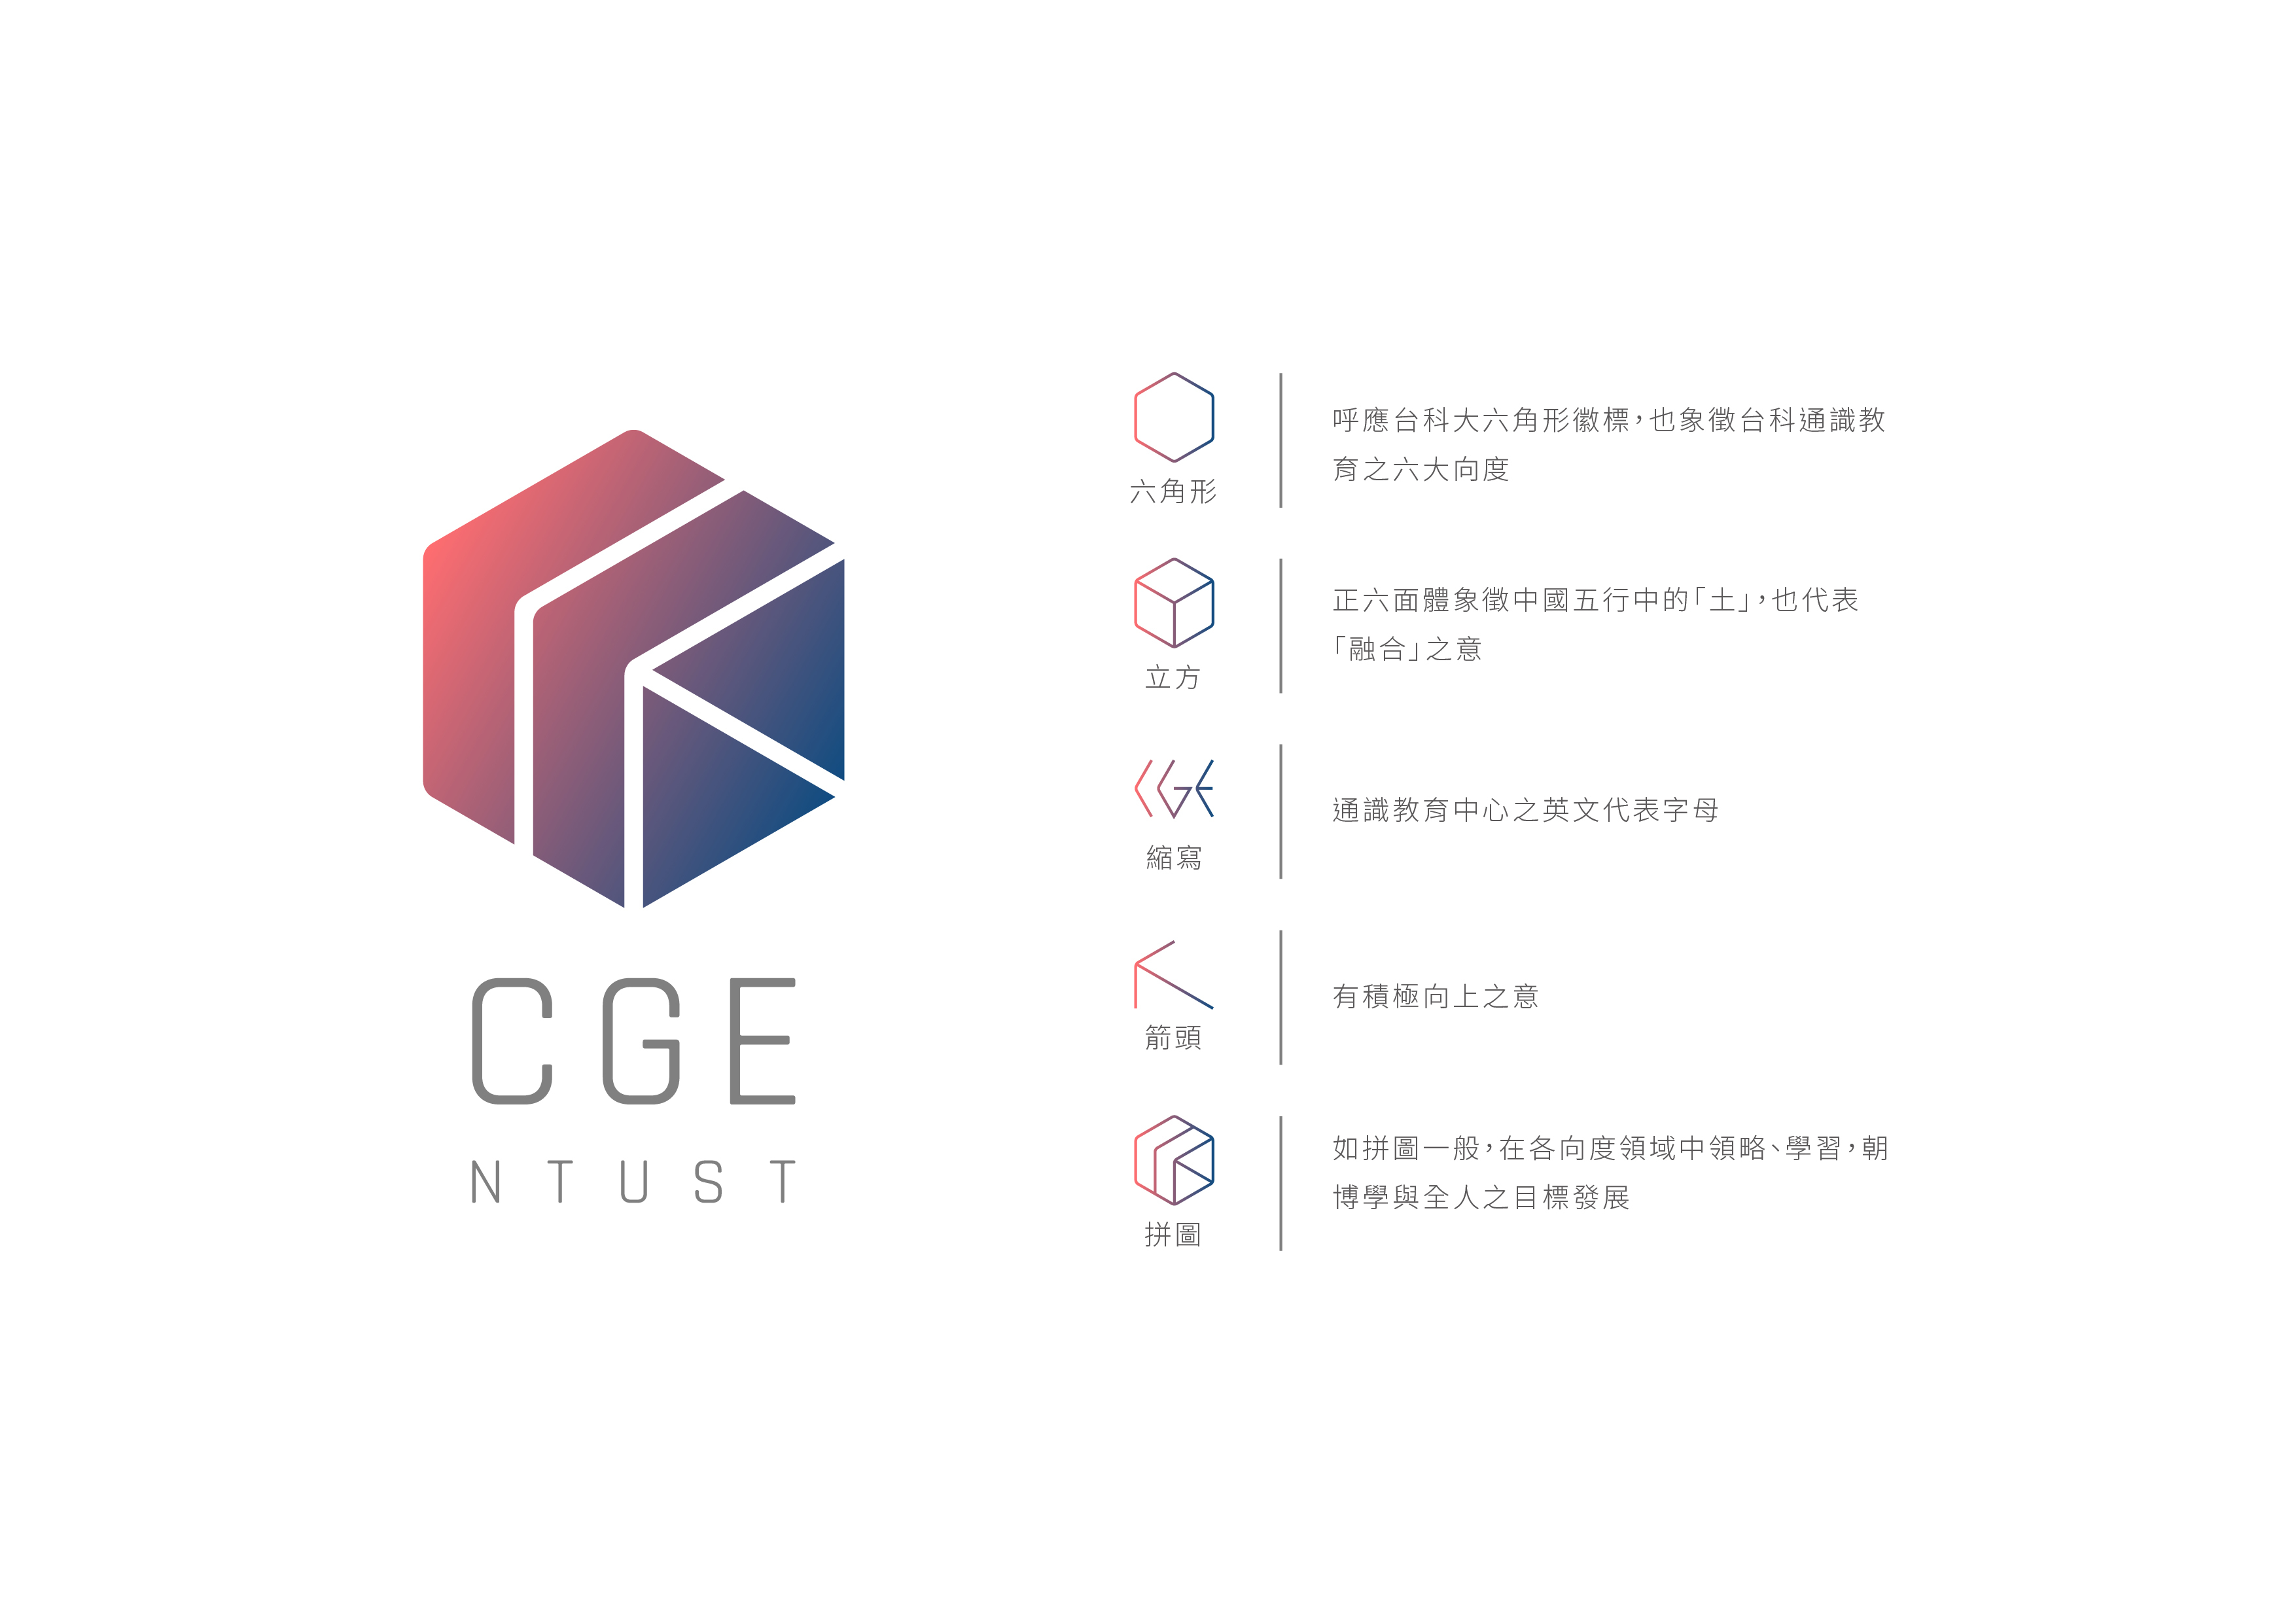 logo-cn